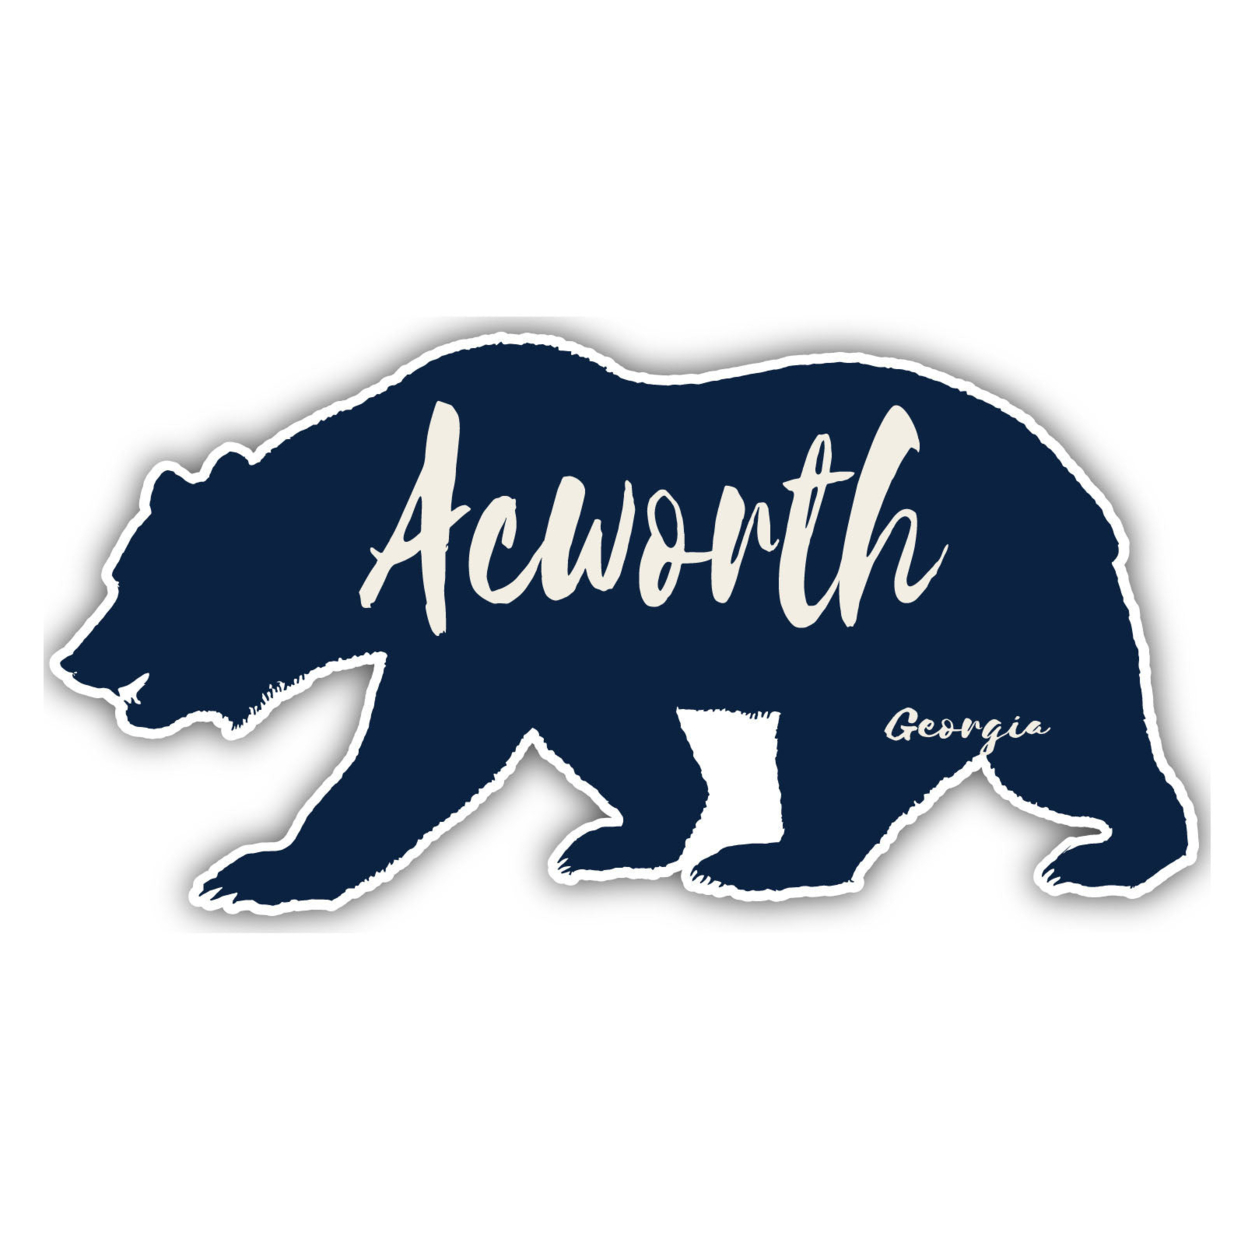 Acworth Georgia Souvenir Decorative Stickers (Choose Theme And Size) - 4-Pack, 8-Inch, Bear